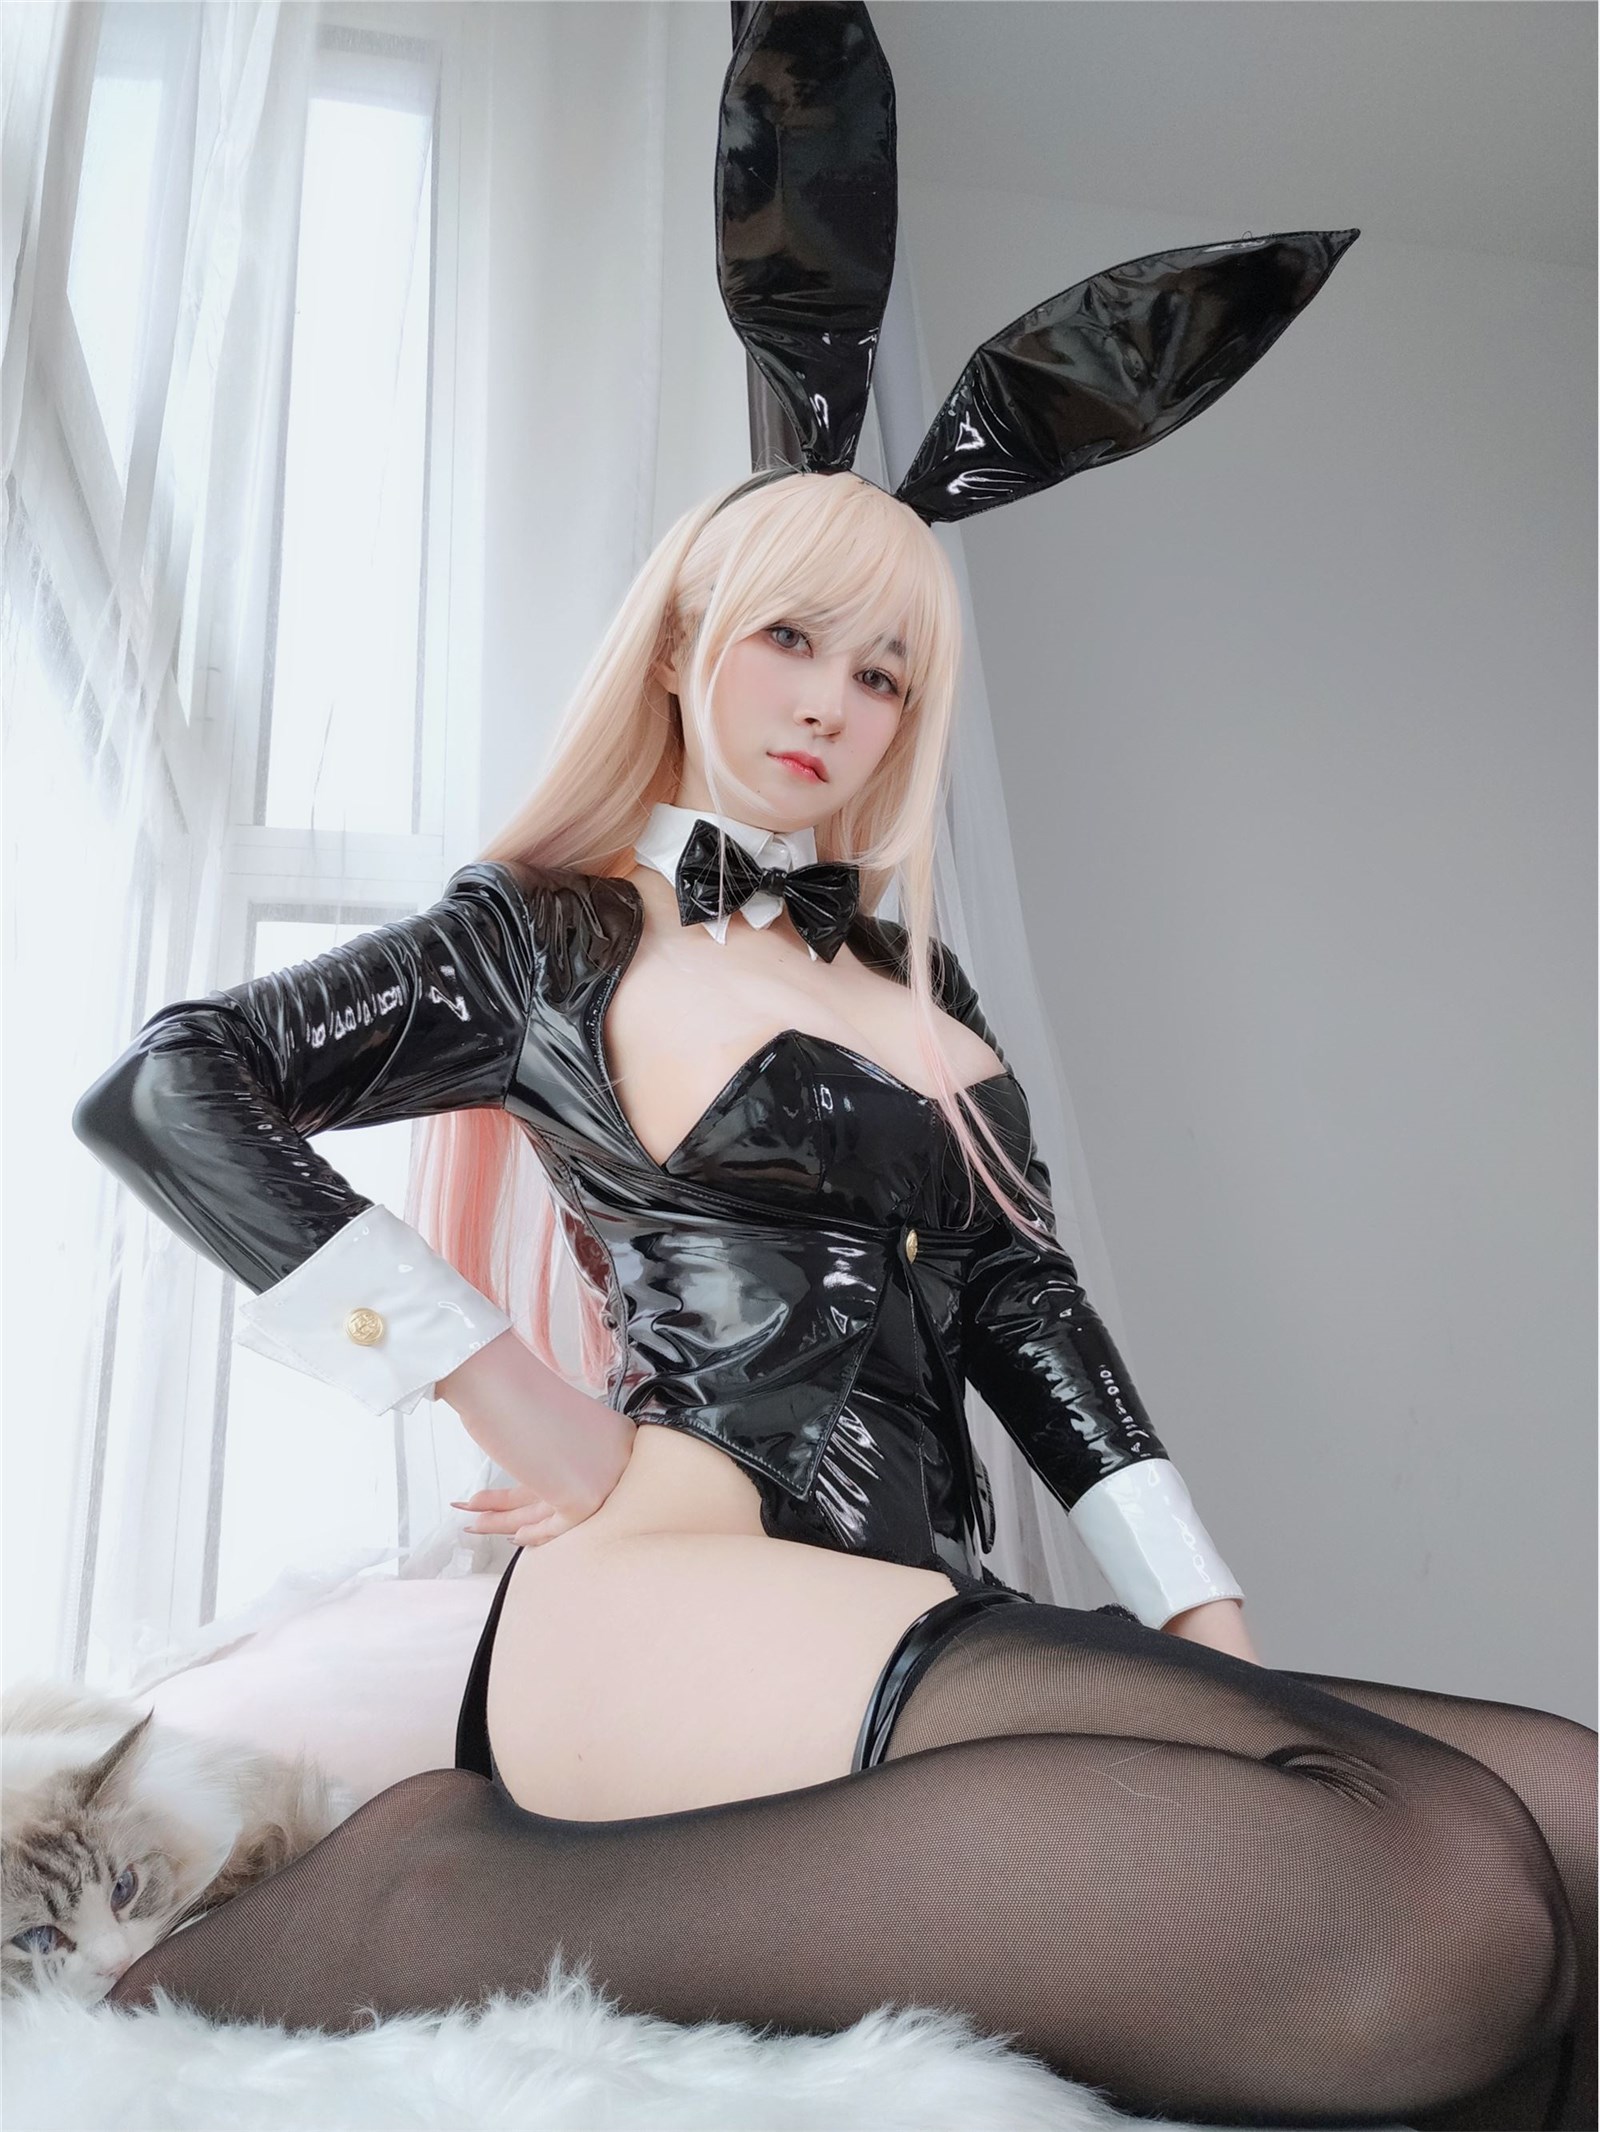 Bunny Girl - livedoor blog(4)